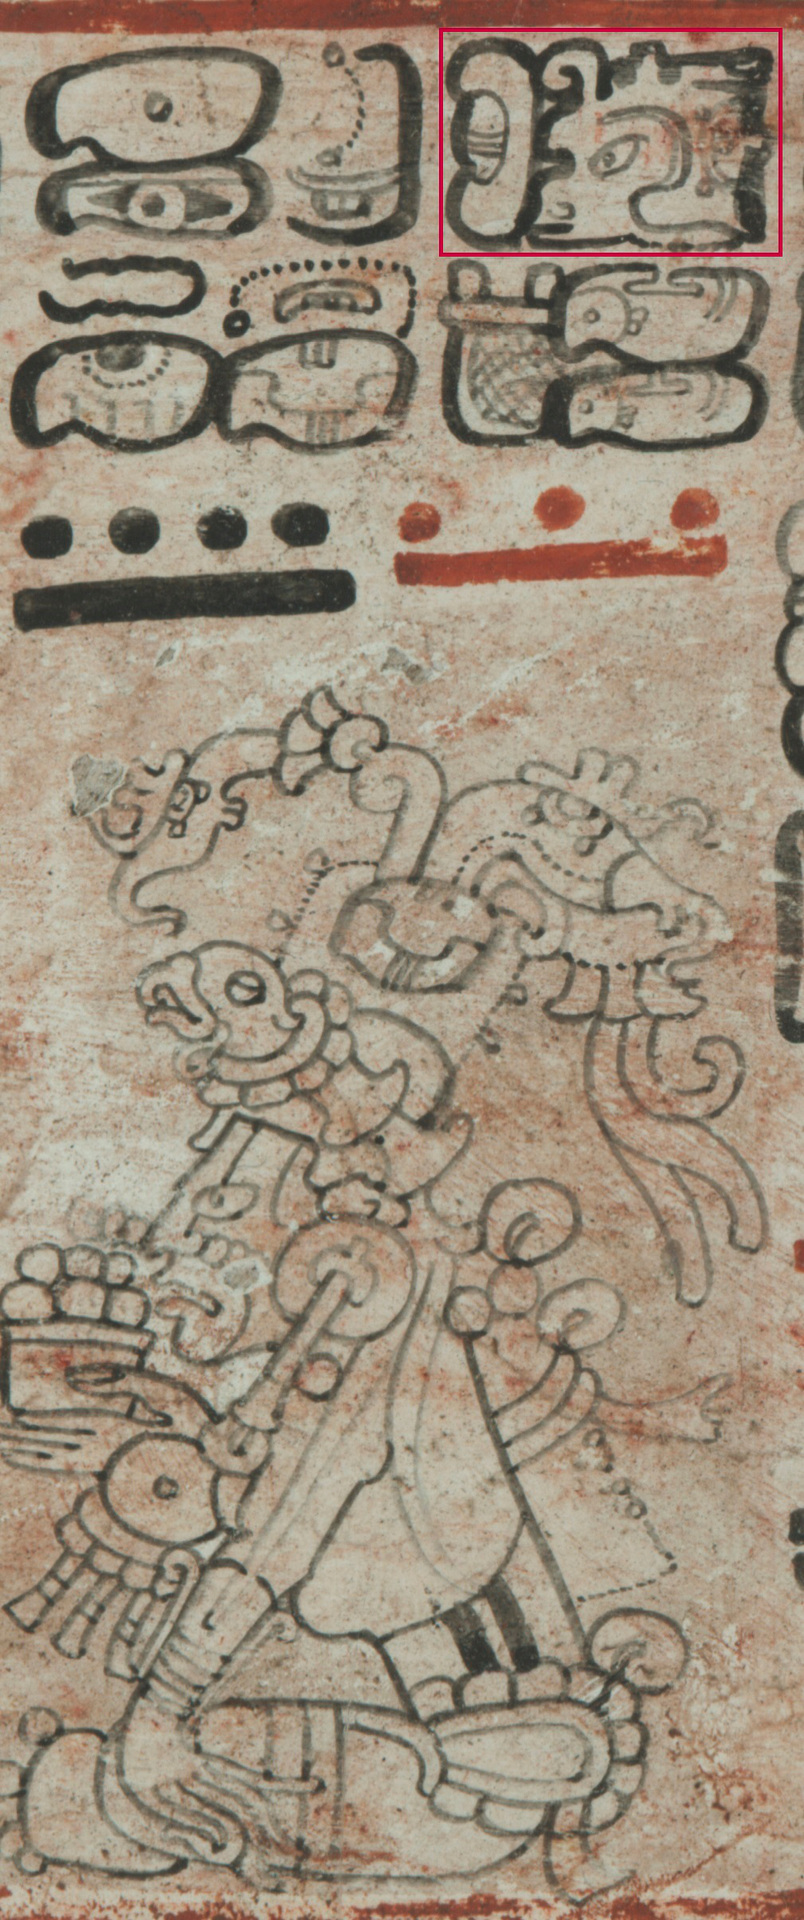 Codex Dresdensis: Maisgott